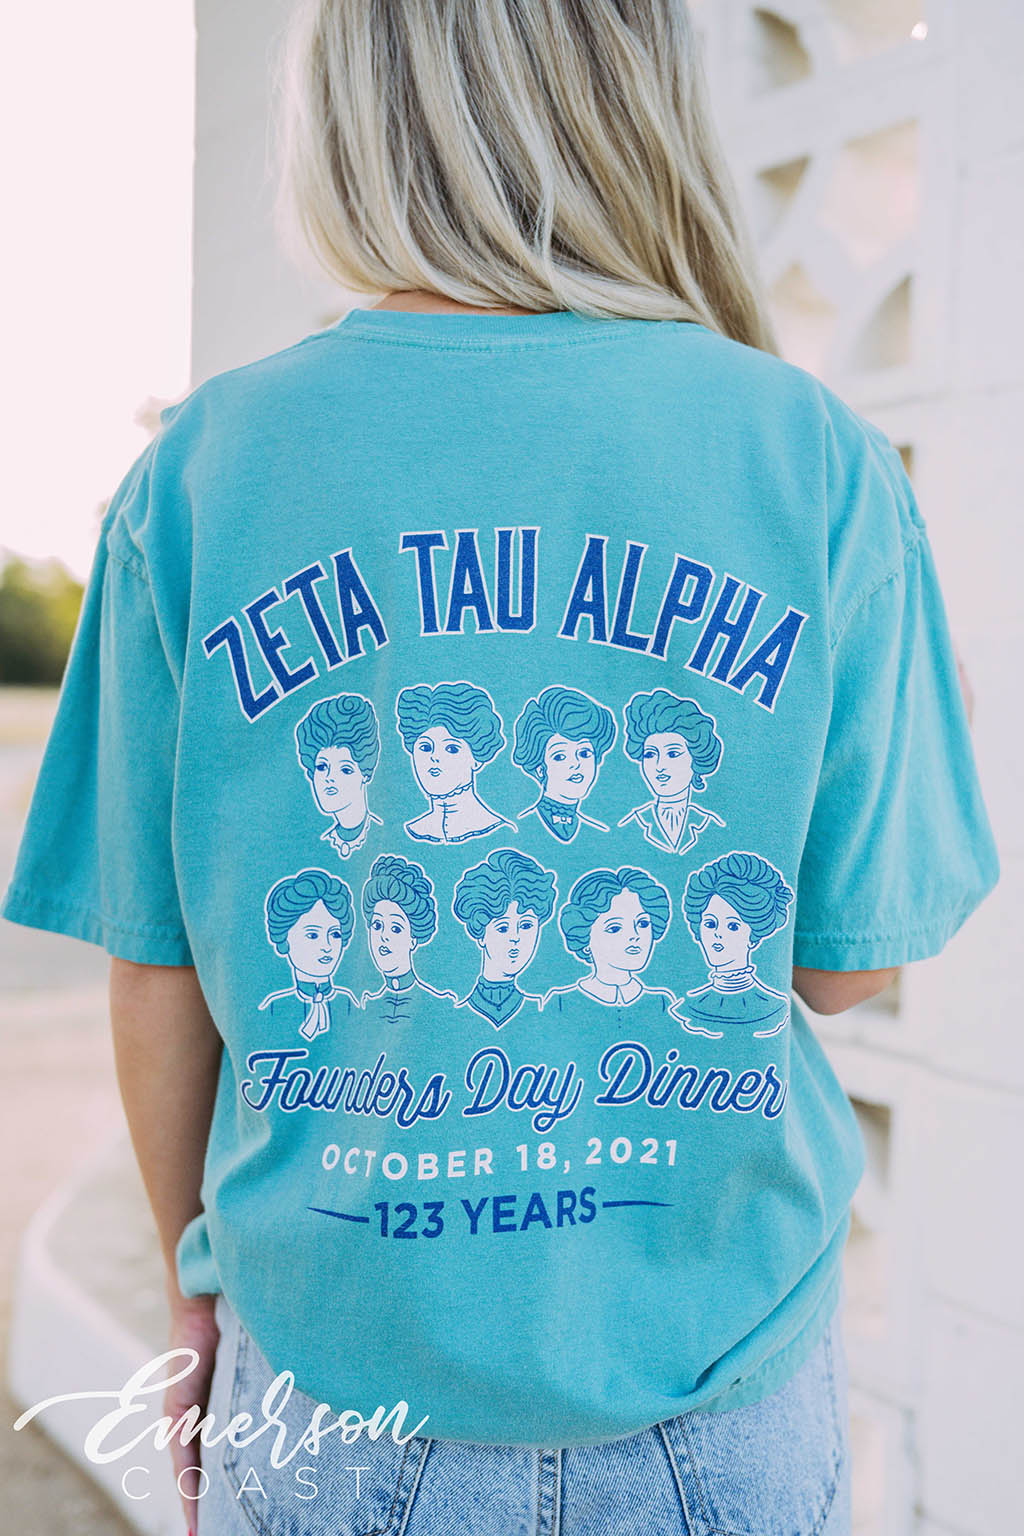 Zeta Tau Alpha Founders Day Dinner Tee